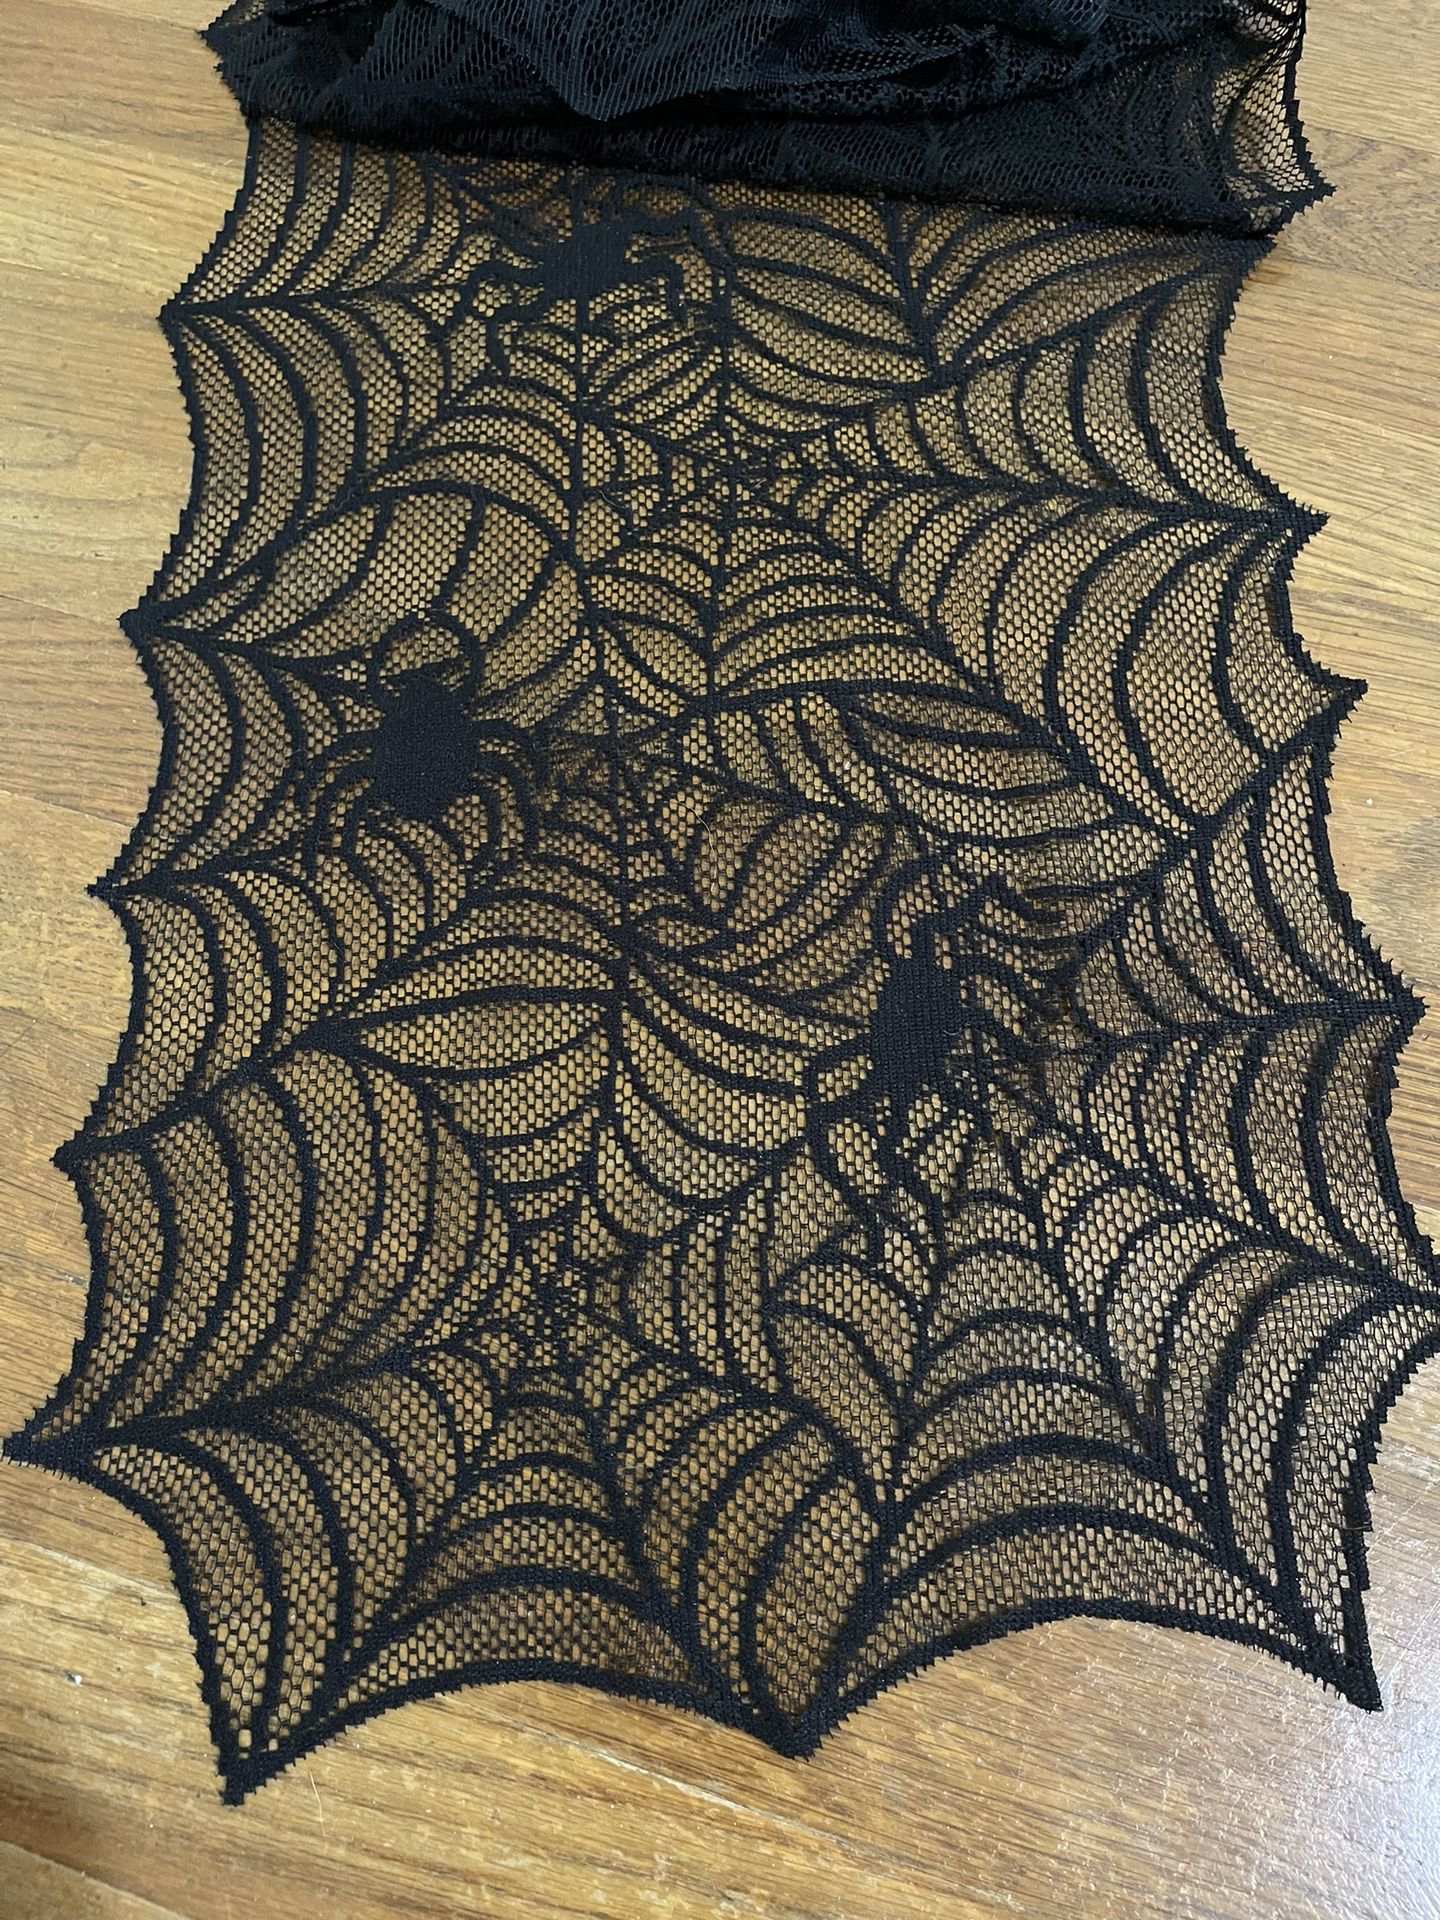 Spooky Spiderweb Lace Table Runner Decor